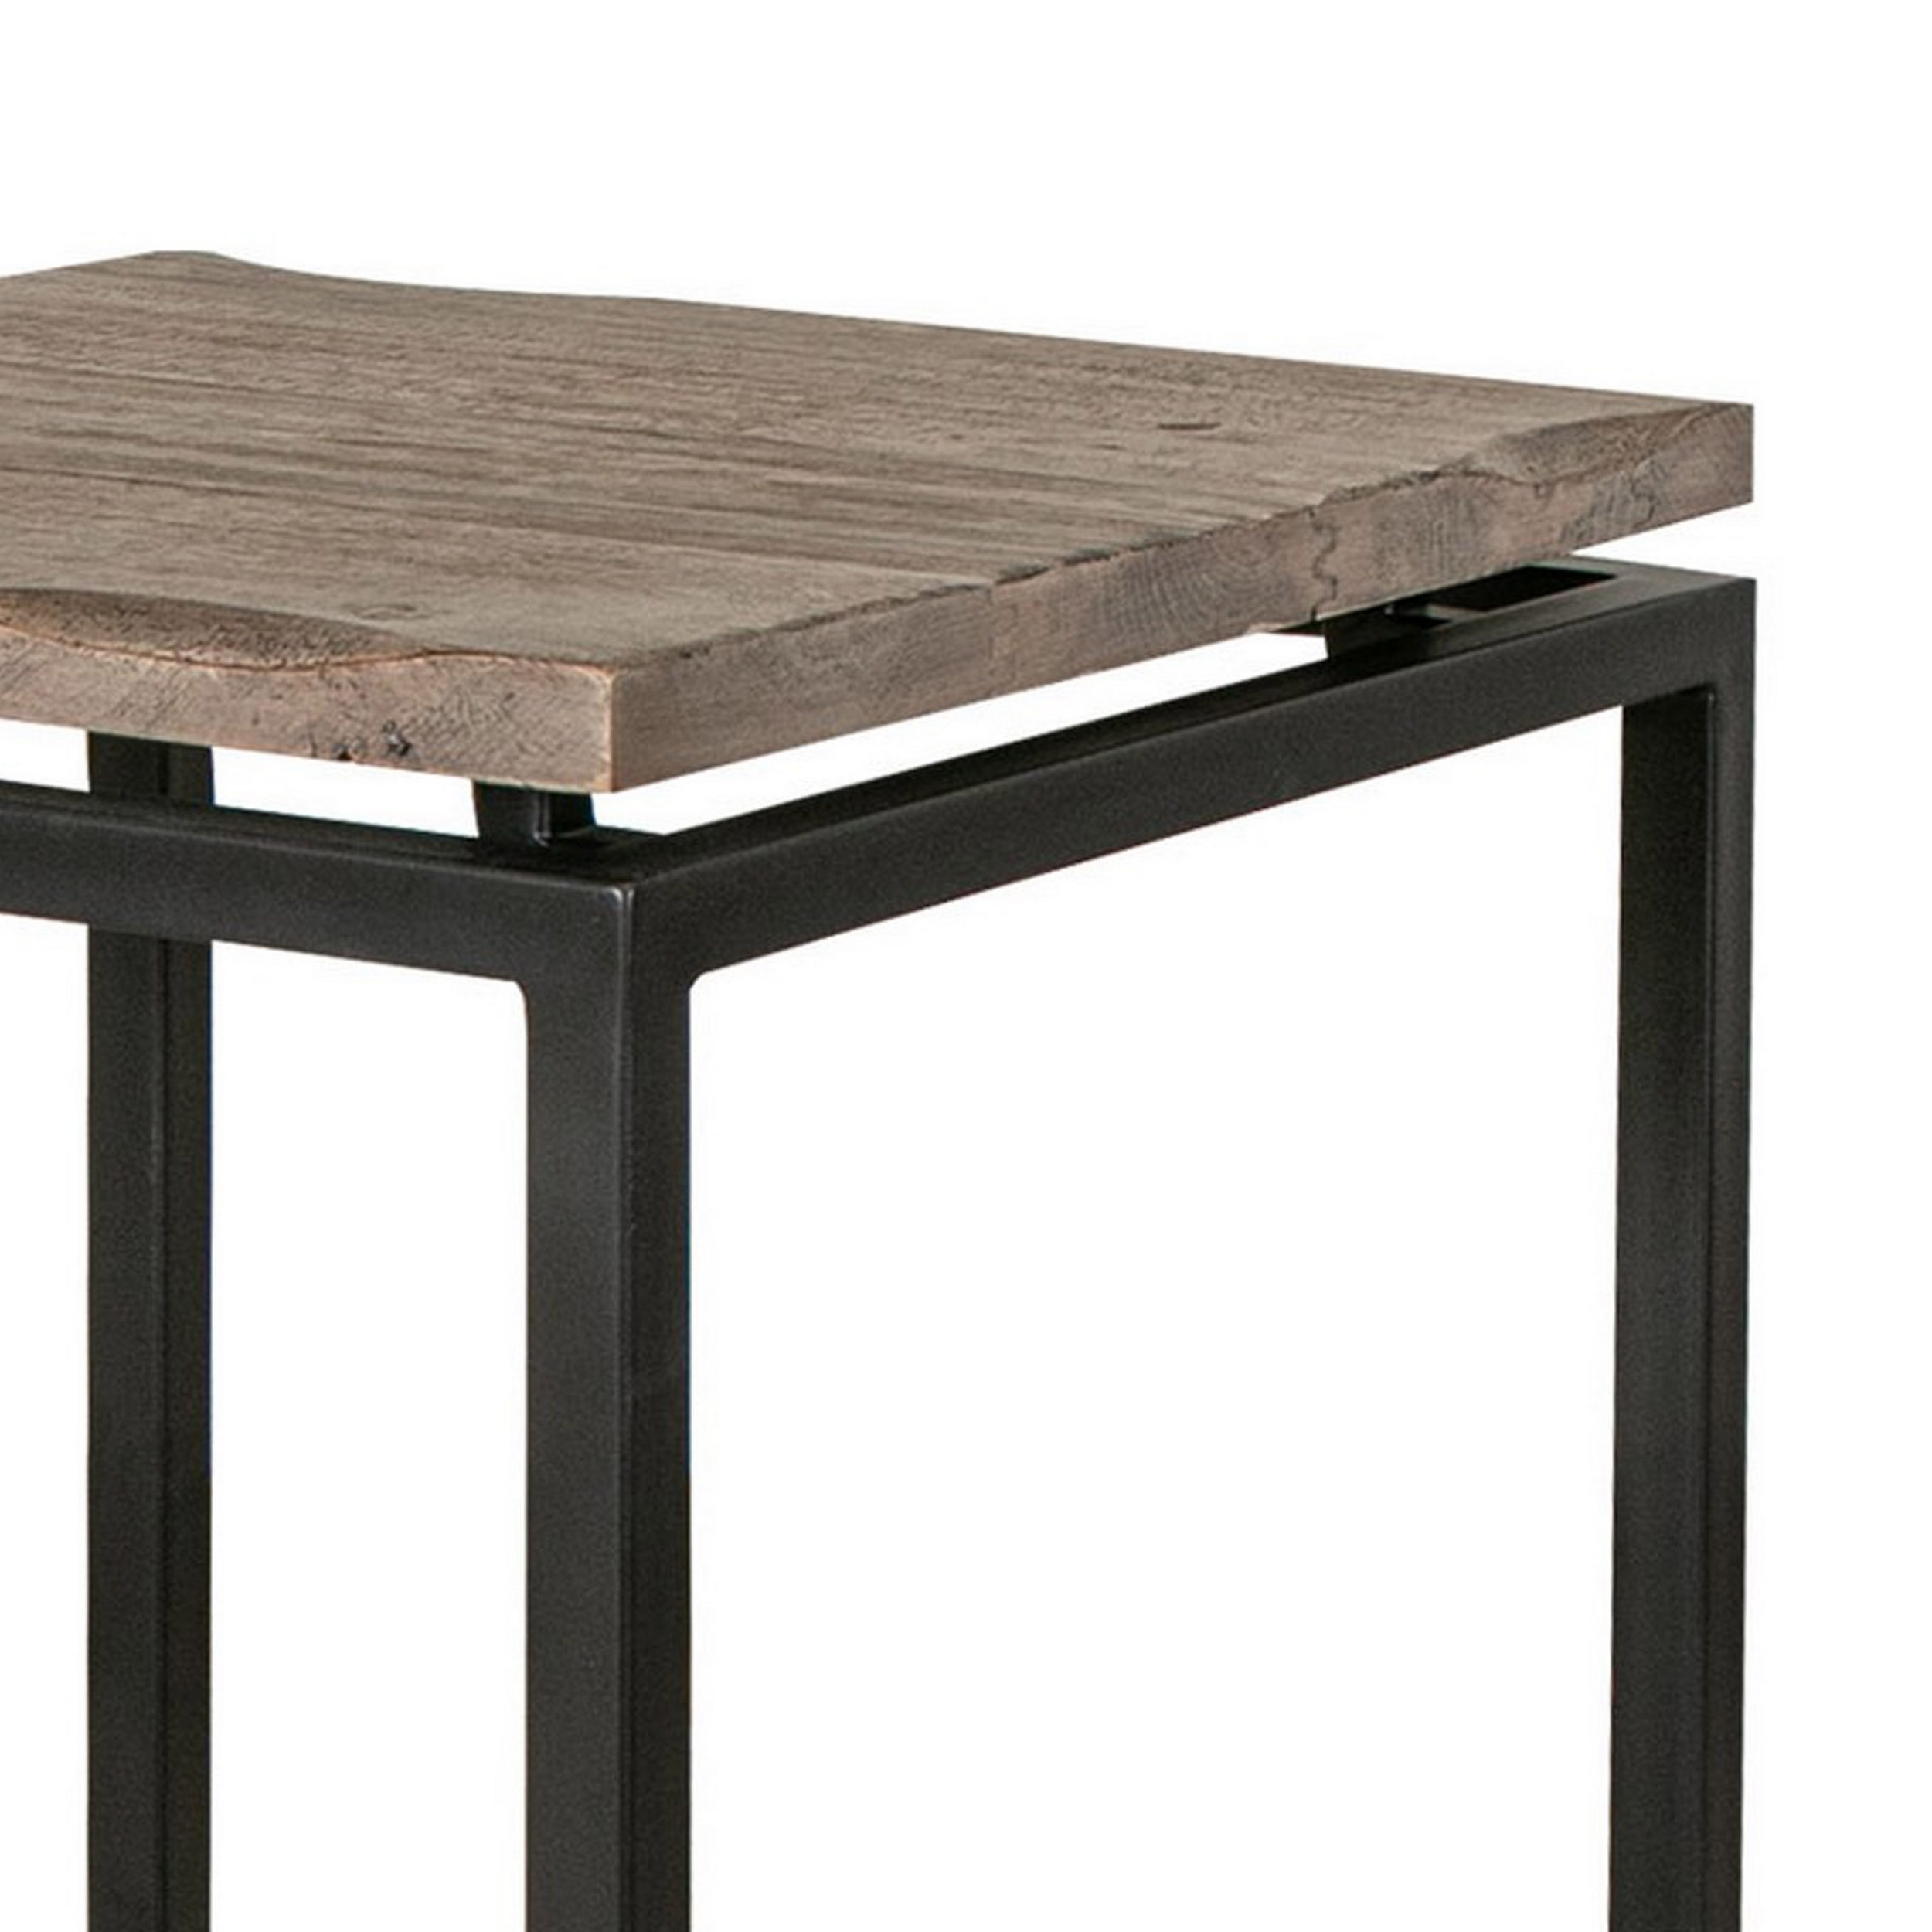 Piel 26 Inch Side End Table, Solid Pine Wood, Raised Top, Distressed Brown- Saltoro Sherpi